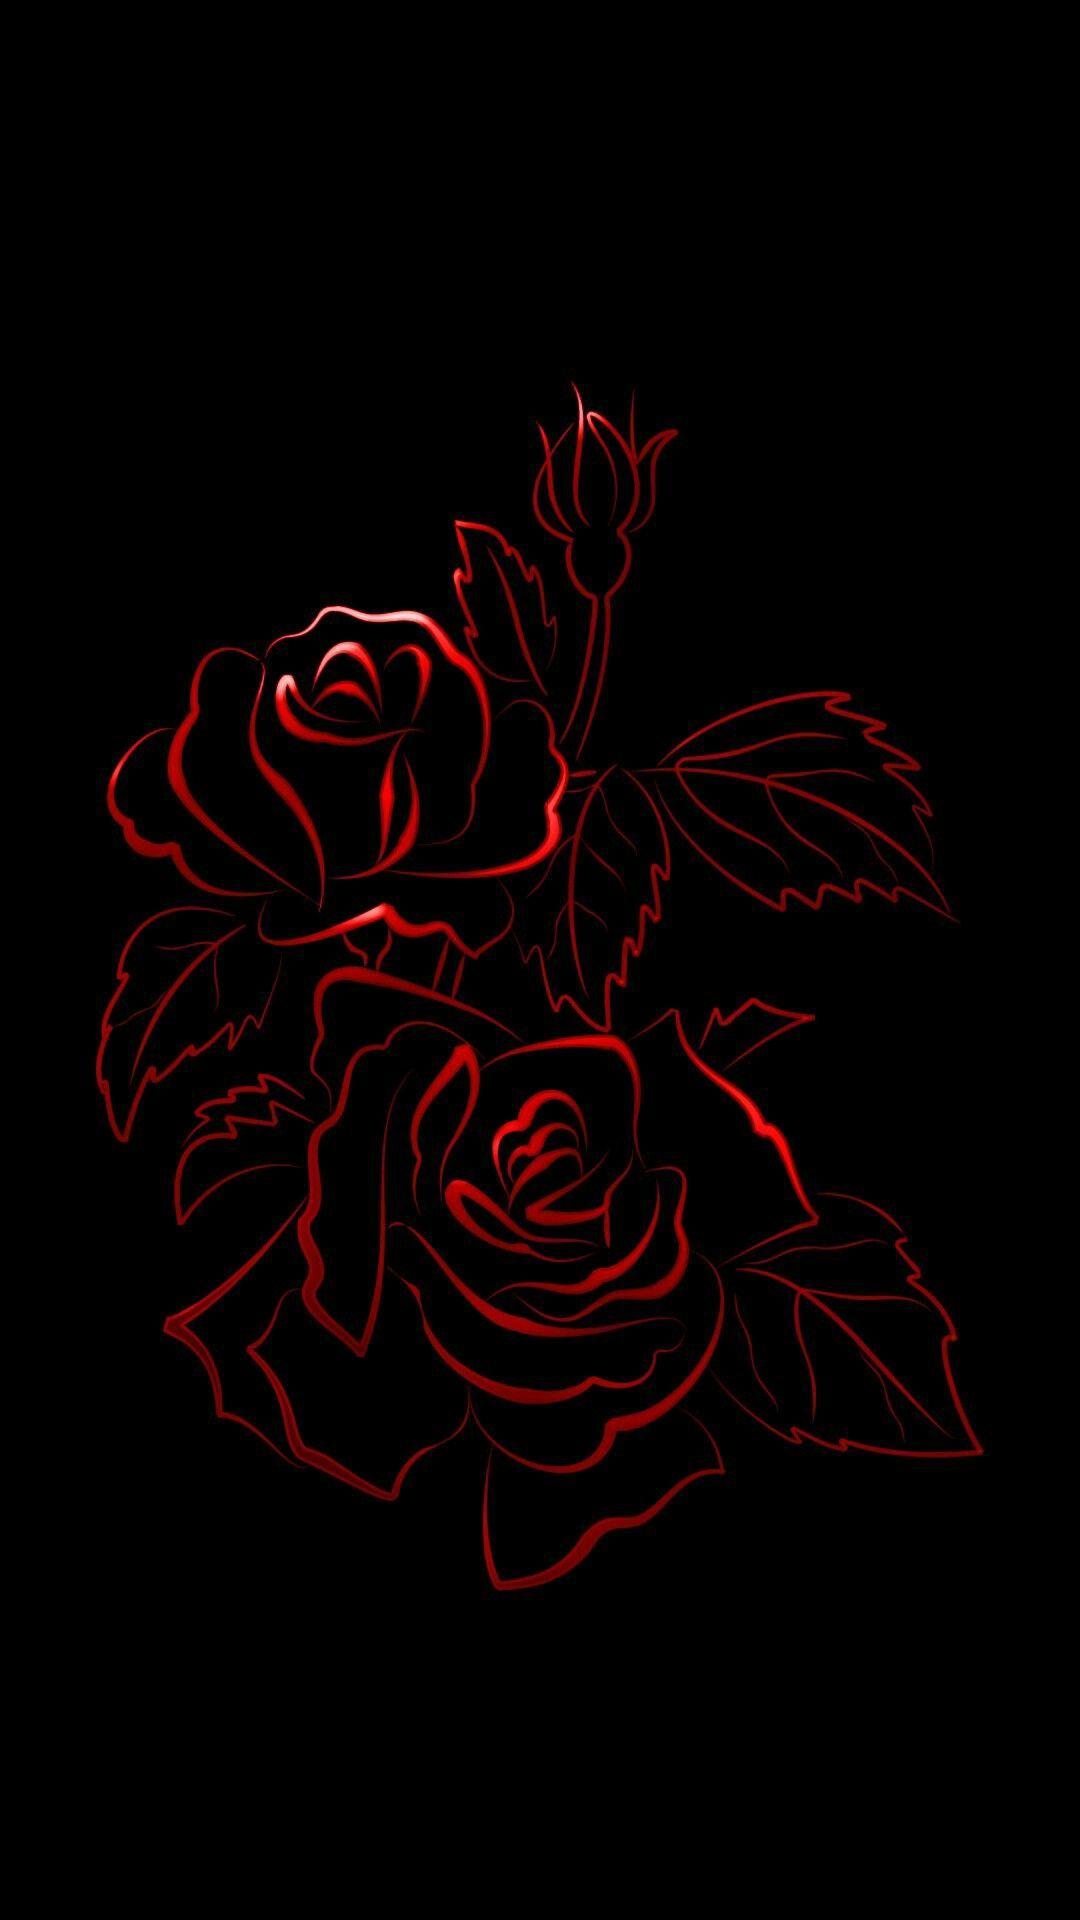 170 Red Rose Black Background Illustrations RoyaltyFree Vector Graphics   Clip Art  iStock  Red roses